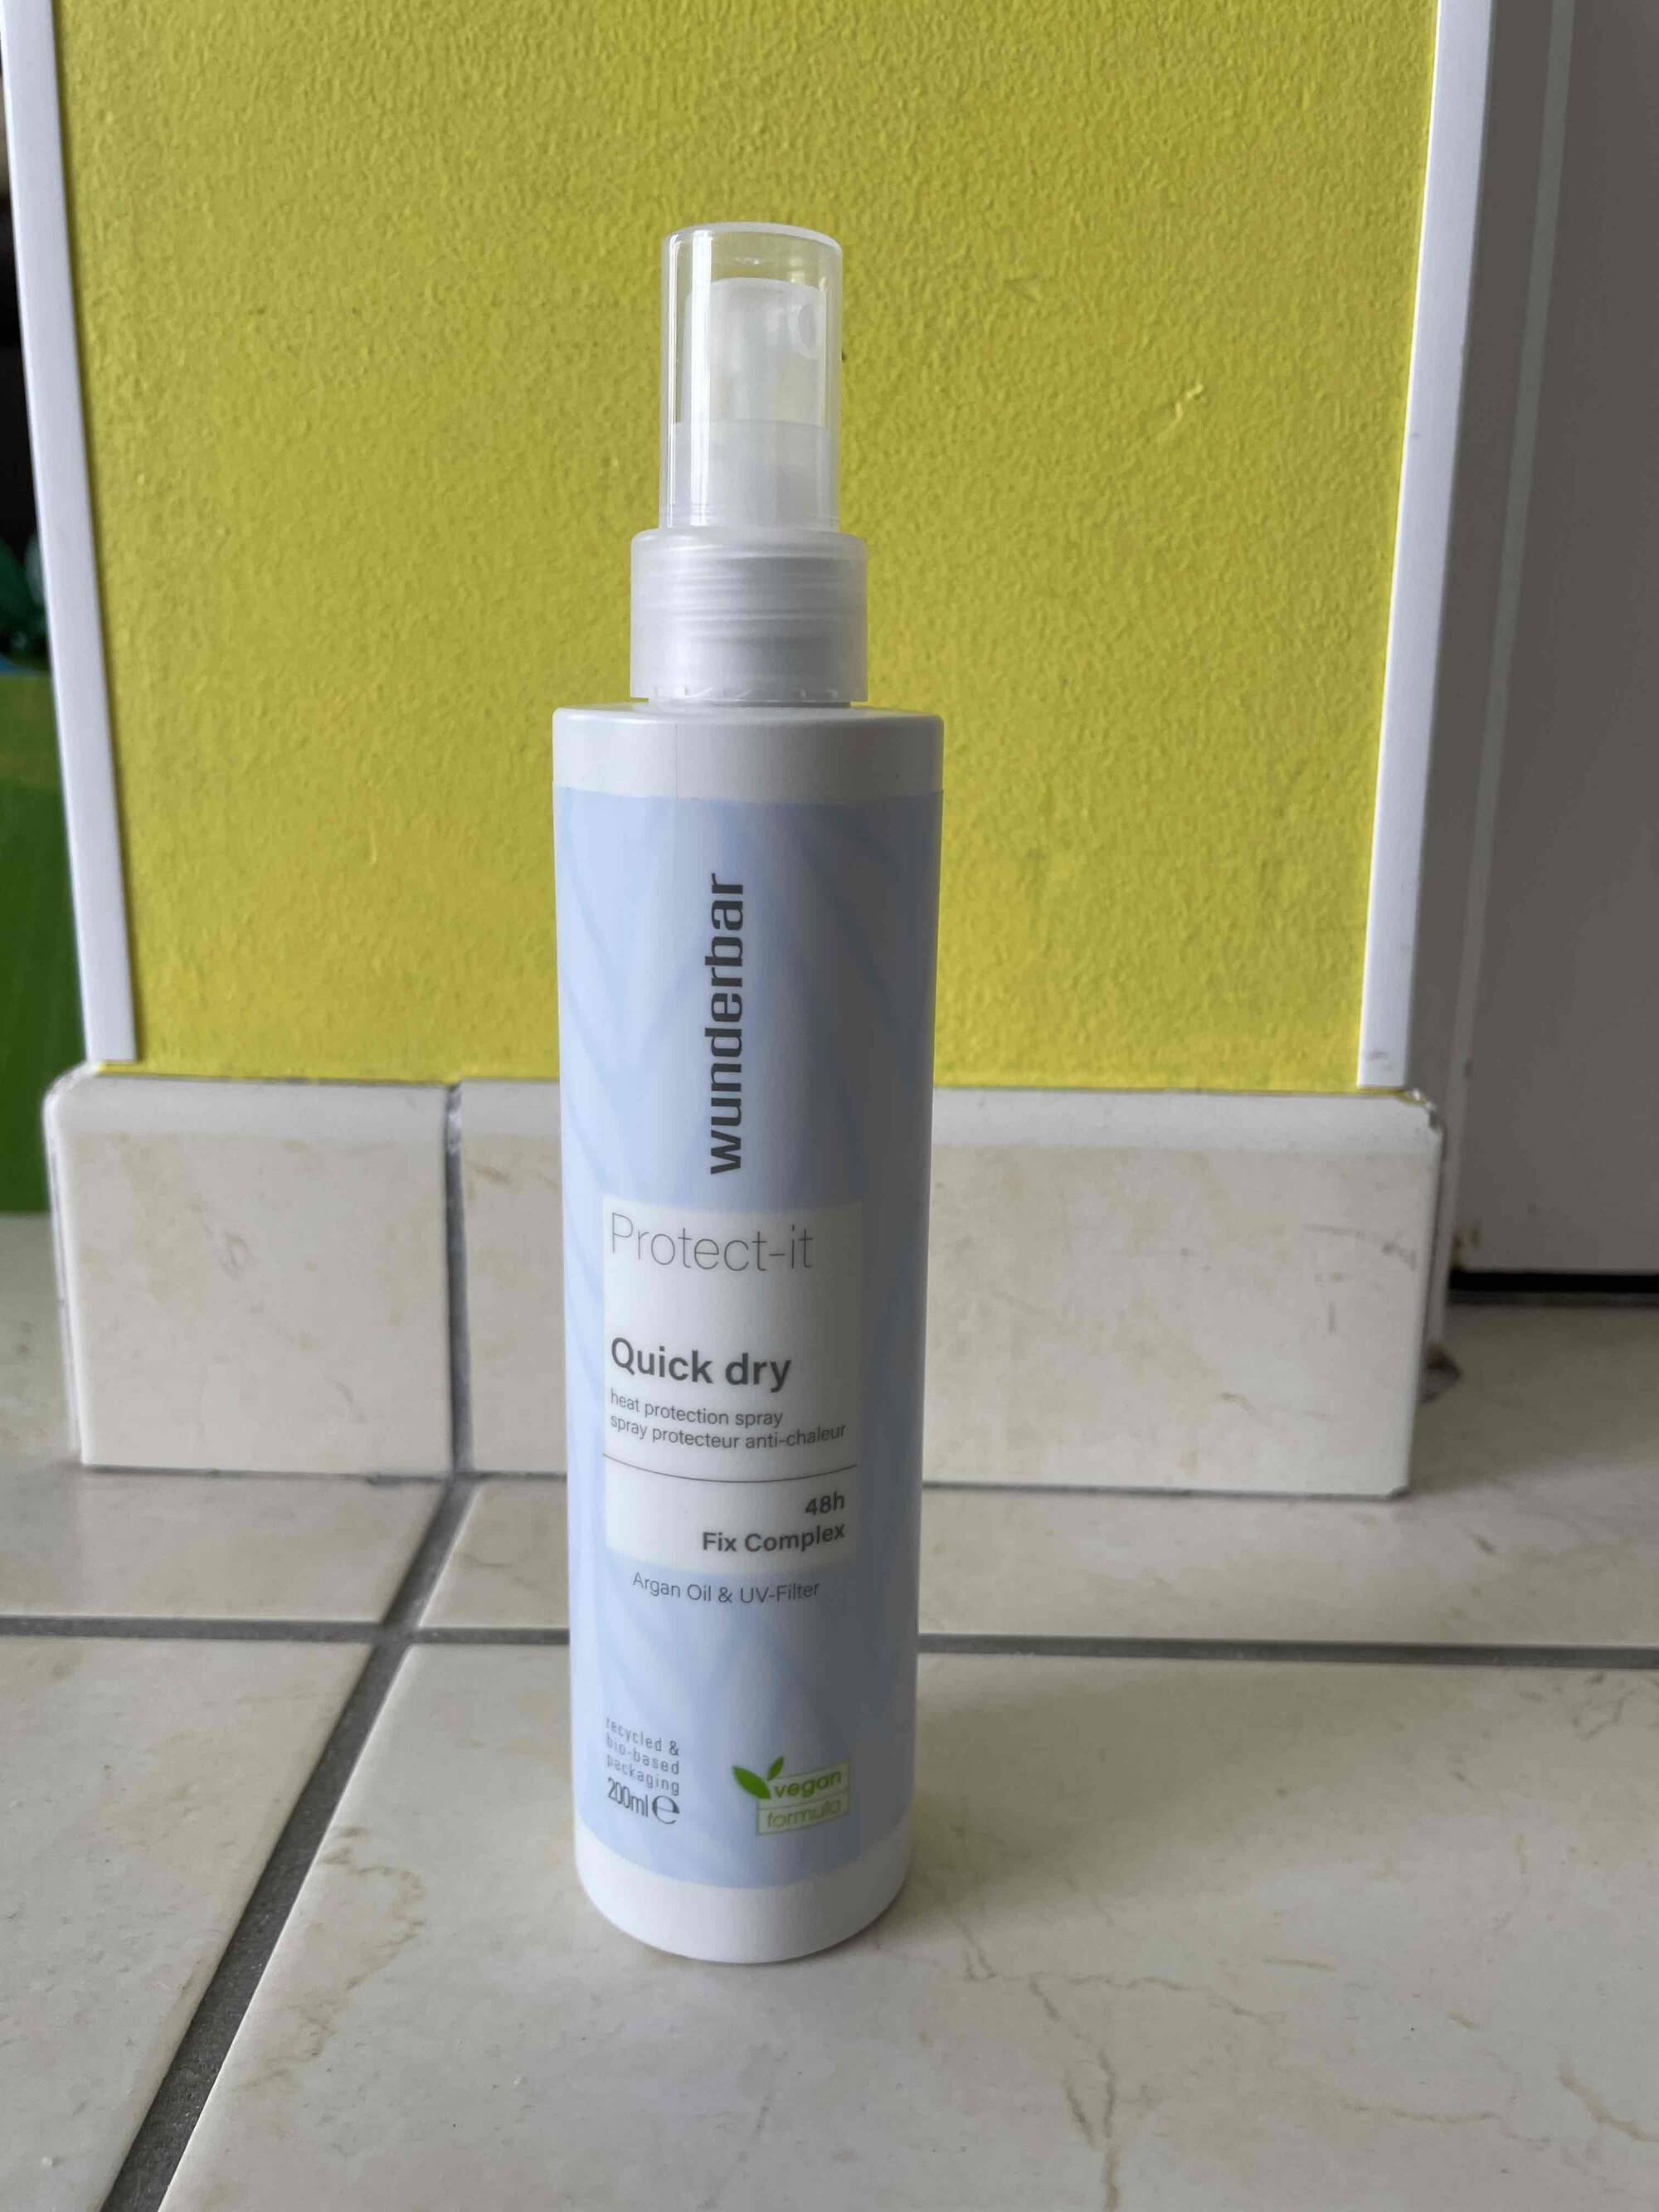 WUNDERBAR - Protect-it quick dry - Spray protecteur anti-chaleur 48h